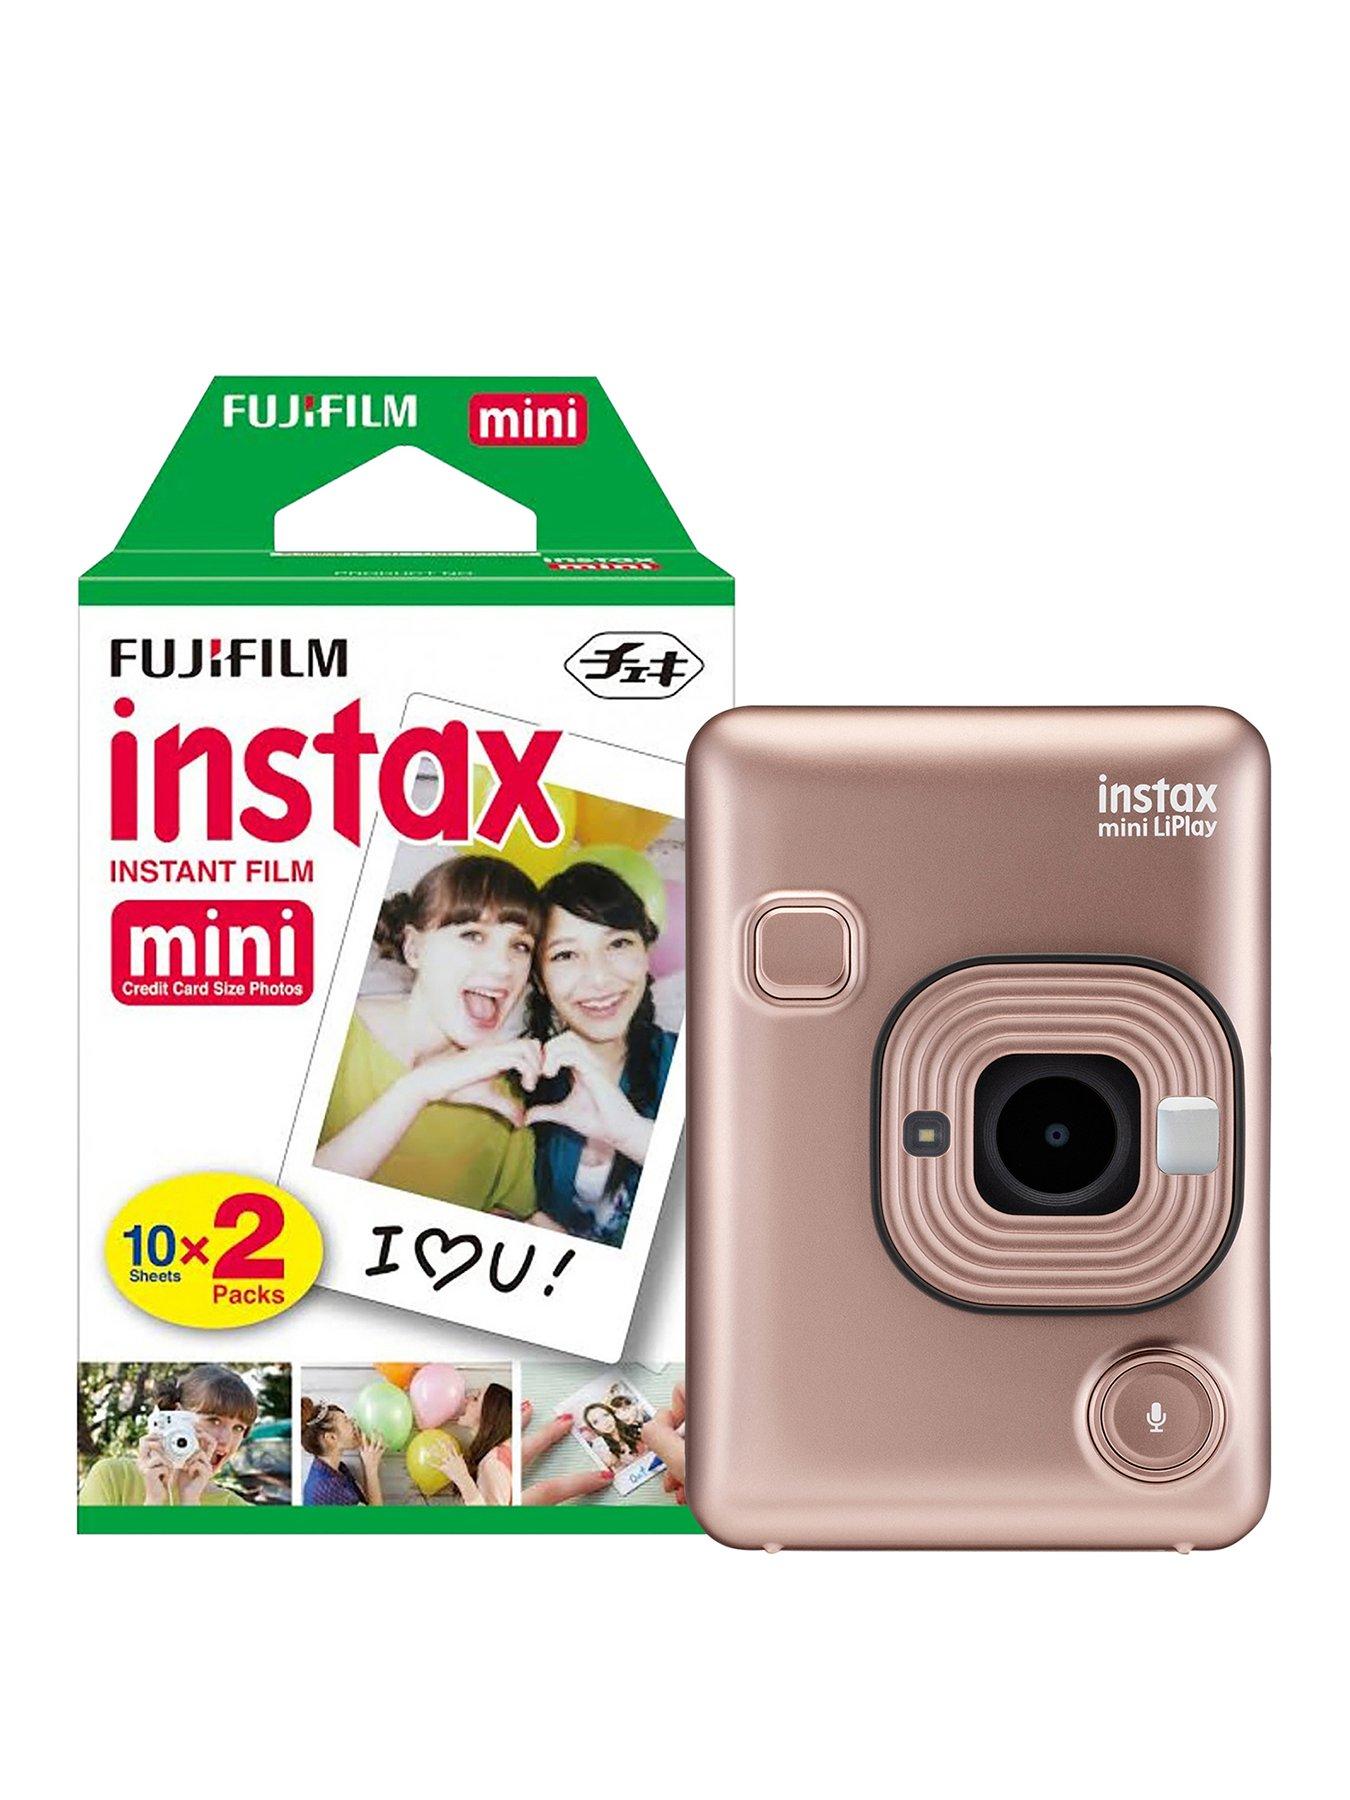 INSTAX mini 12 - INSTAX by Fujifilm (UK)